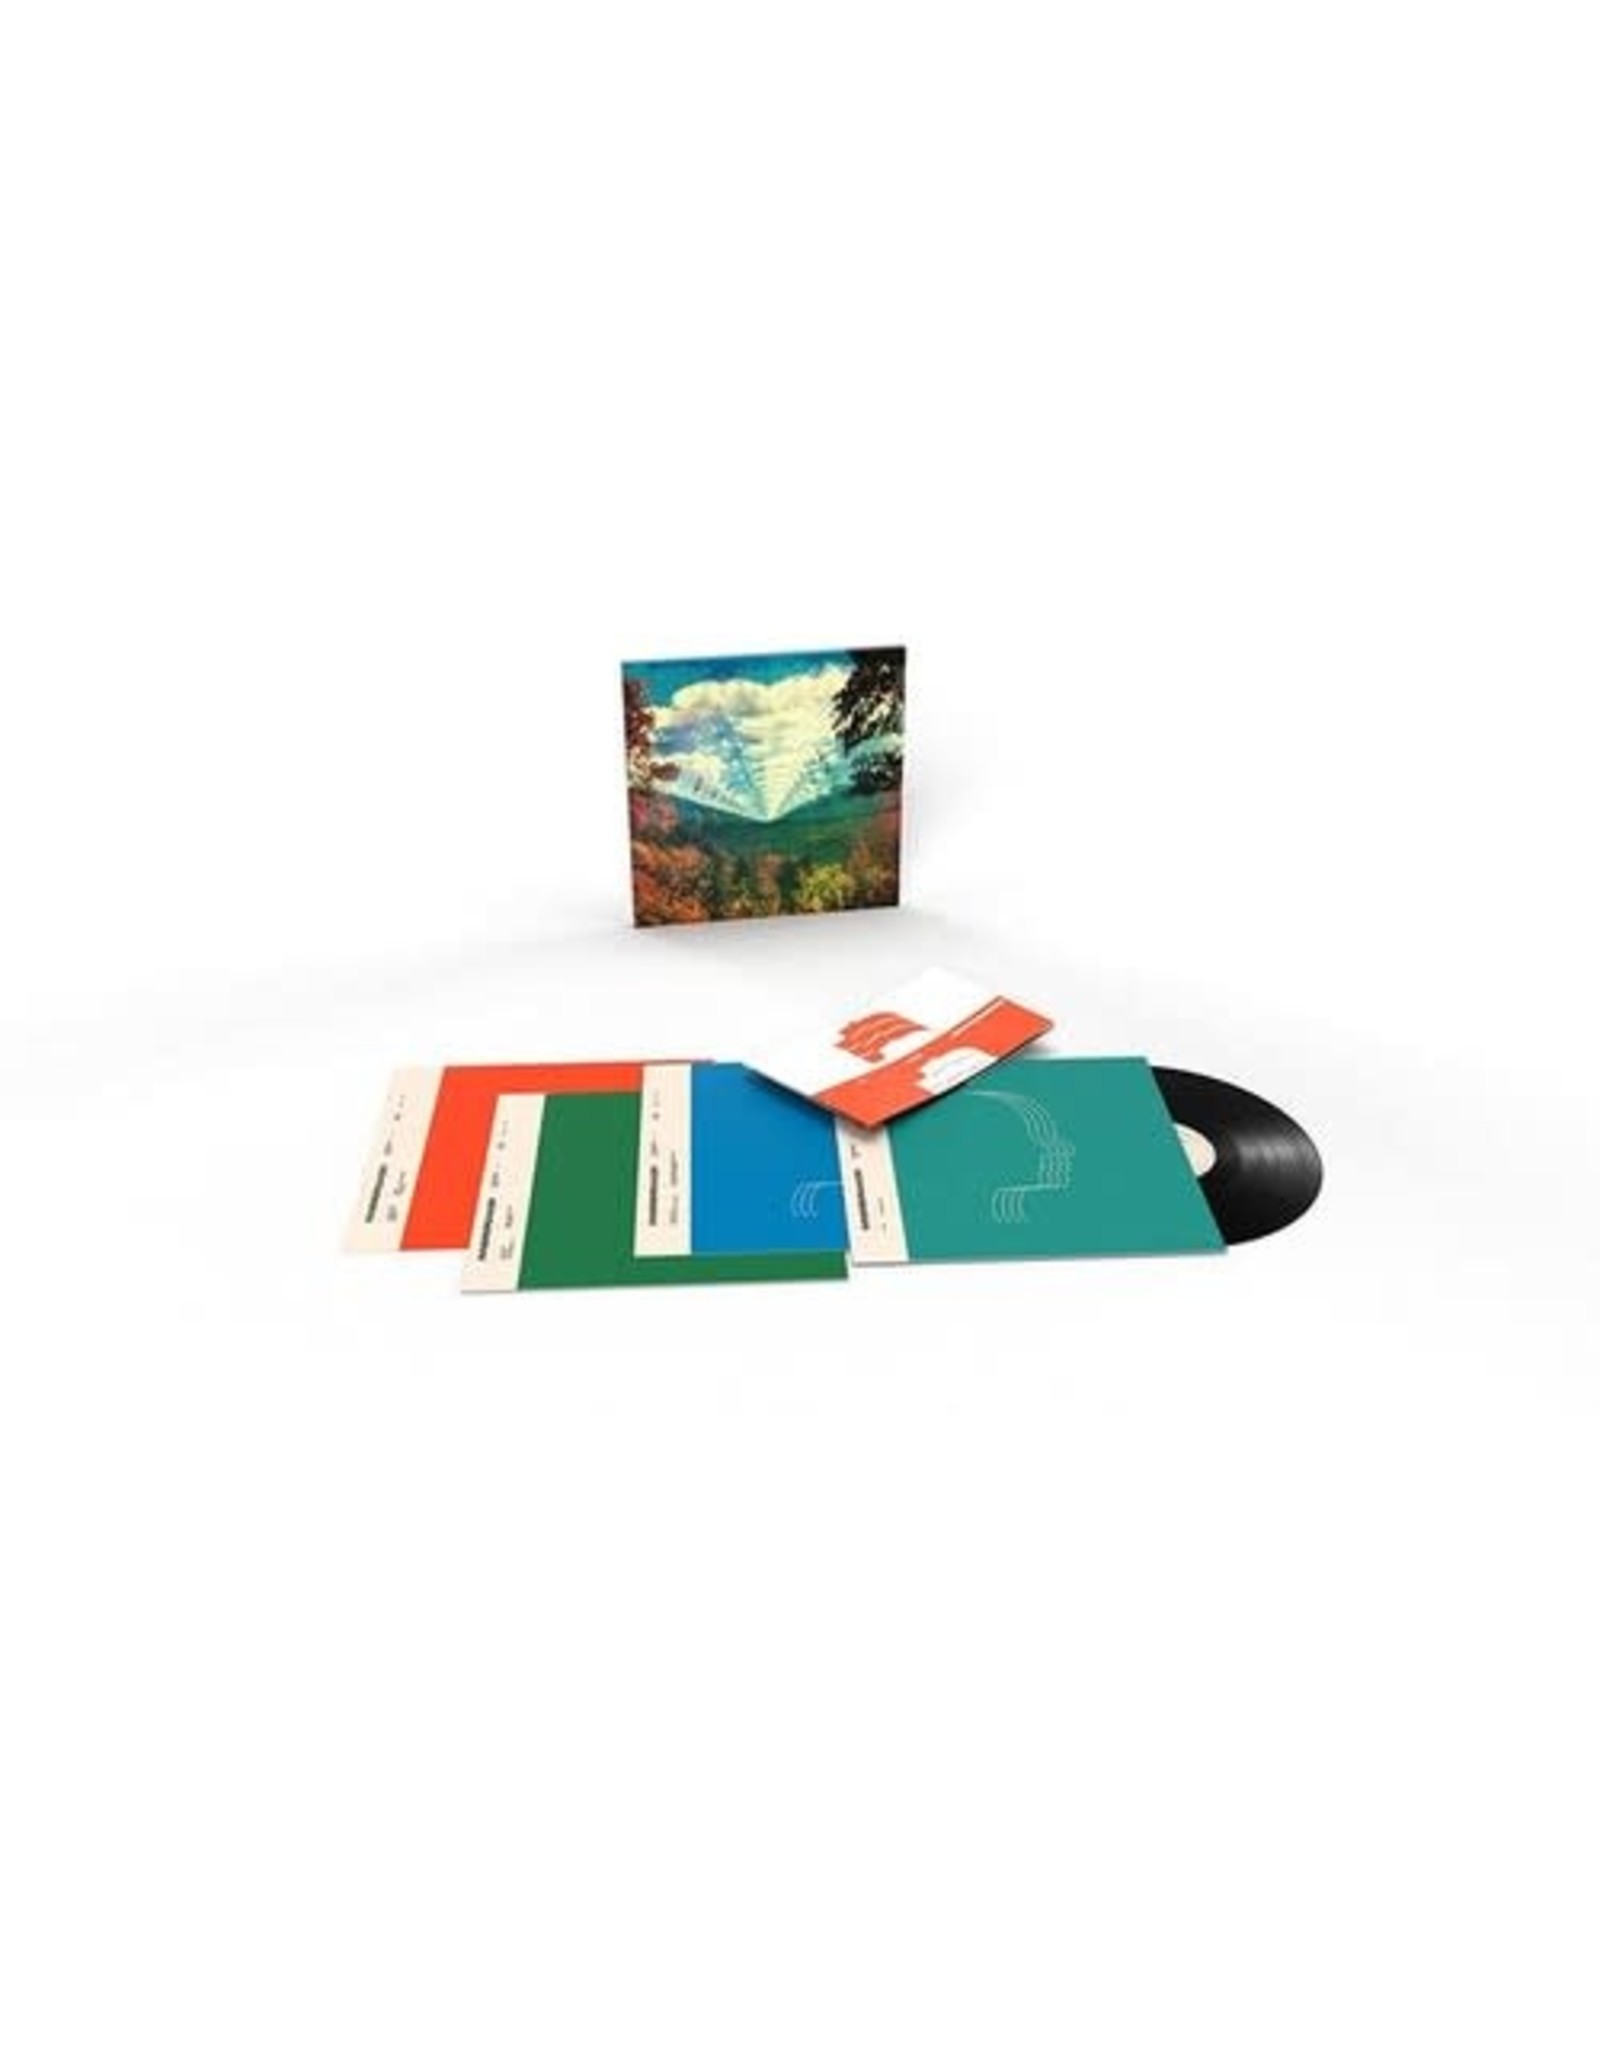 New Vinyl Tame Impala - Innerspeaker: 10 Year Anniversary Edition 4LP Box